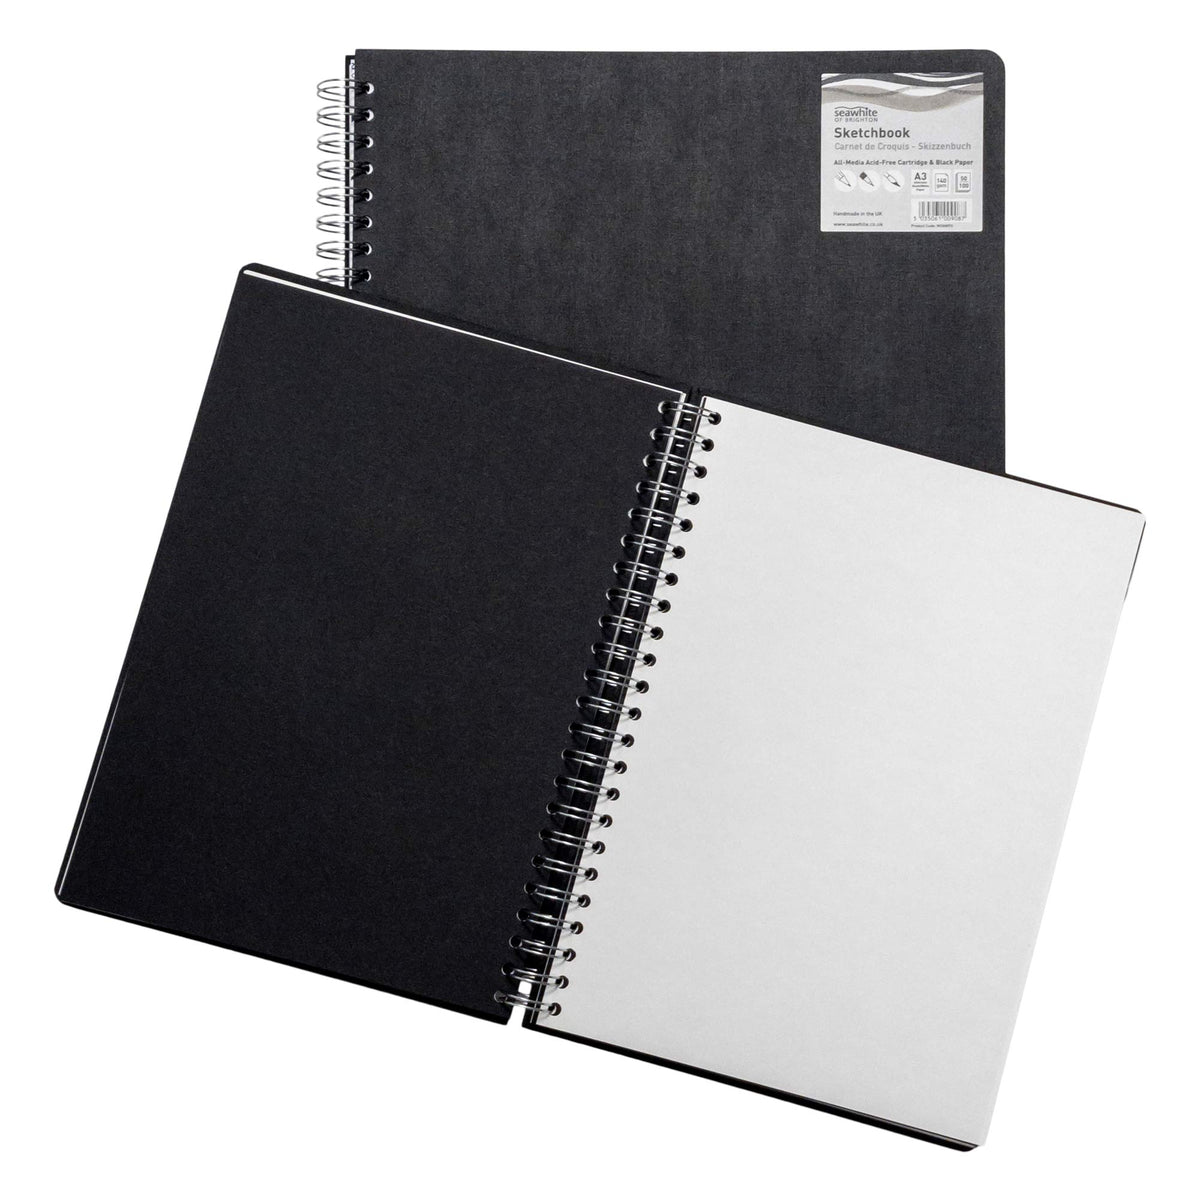 Seawhite Black/White Euro Sketchbook - A4 and A3